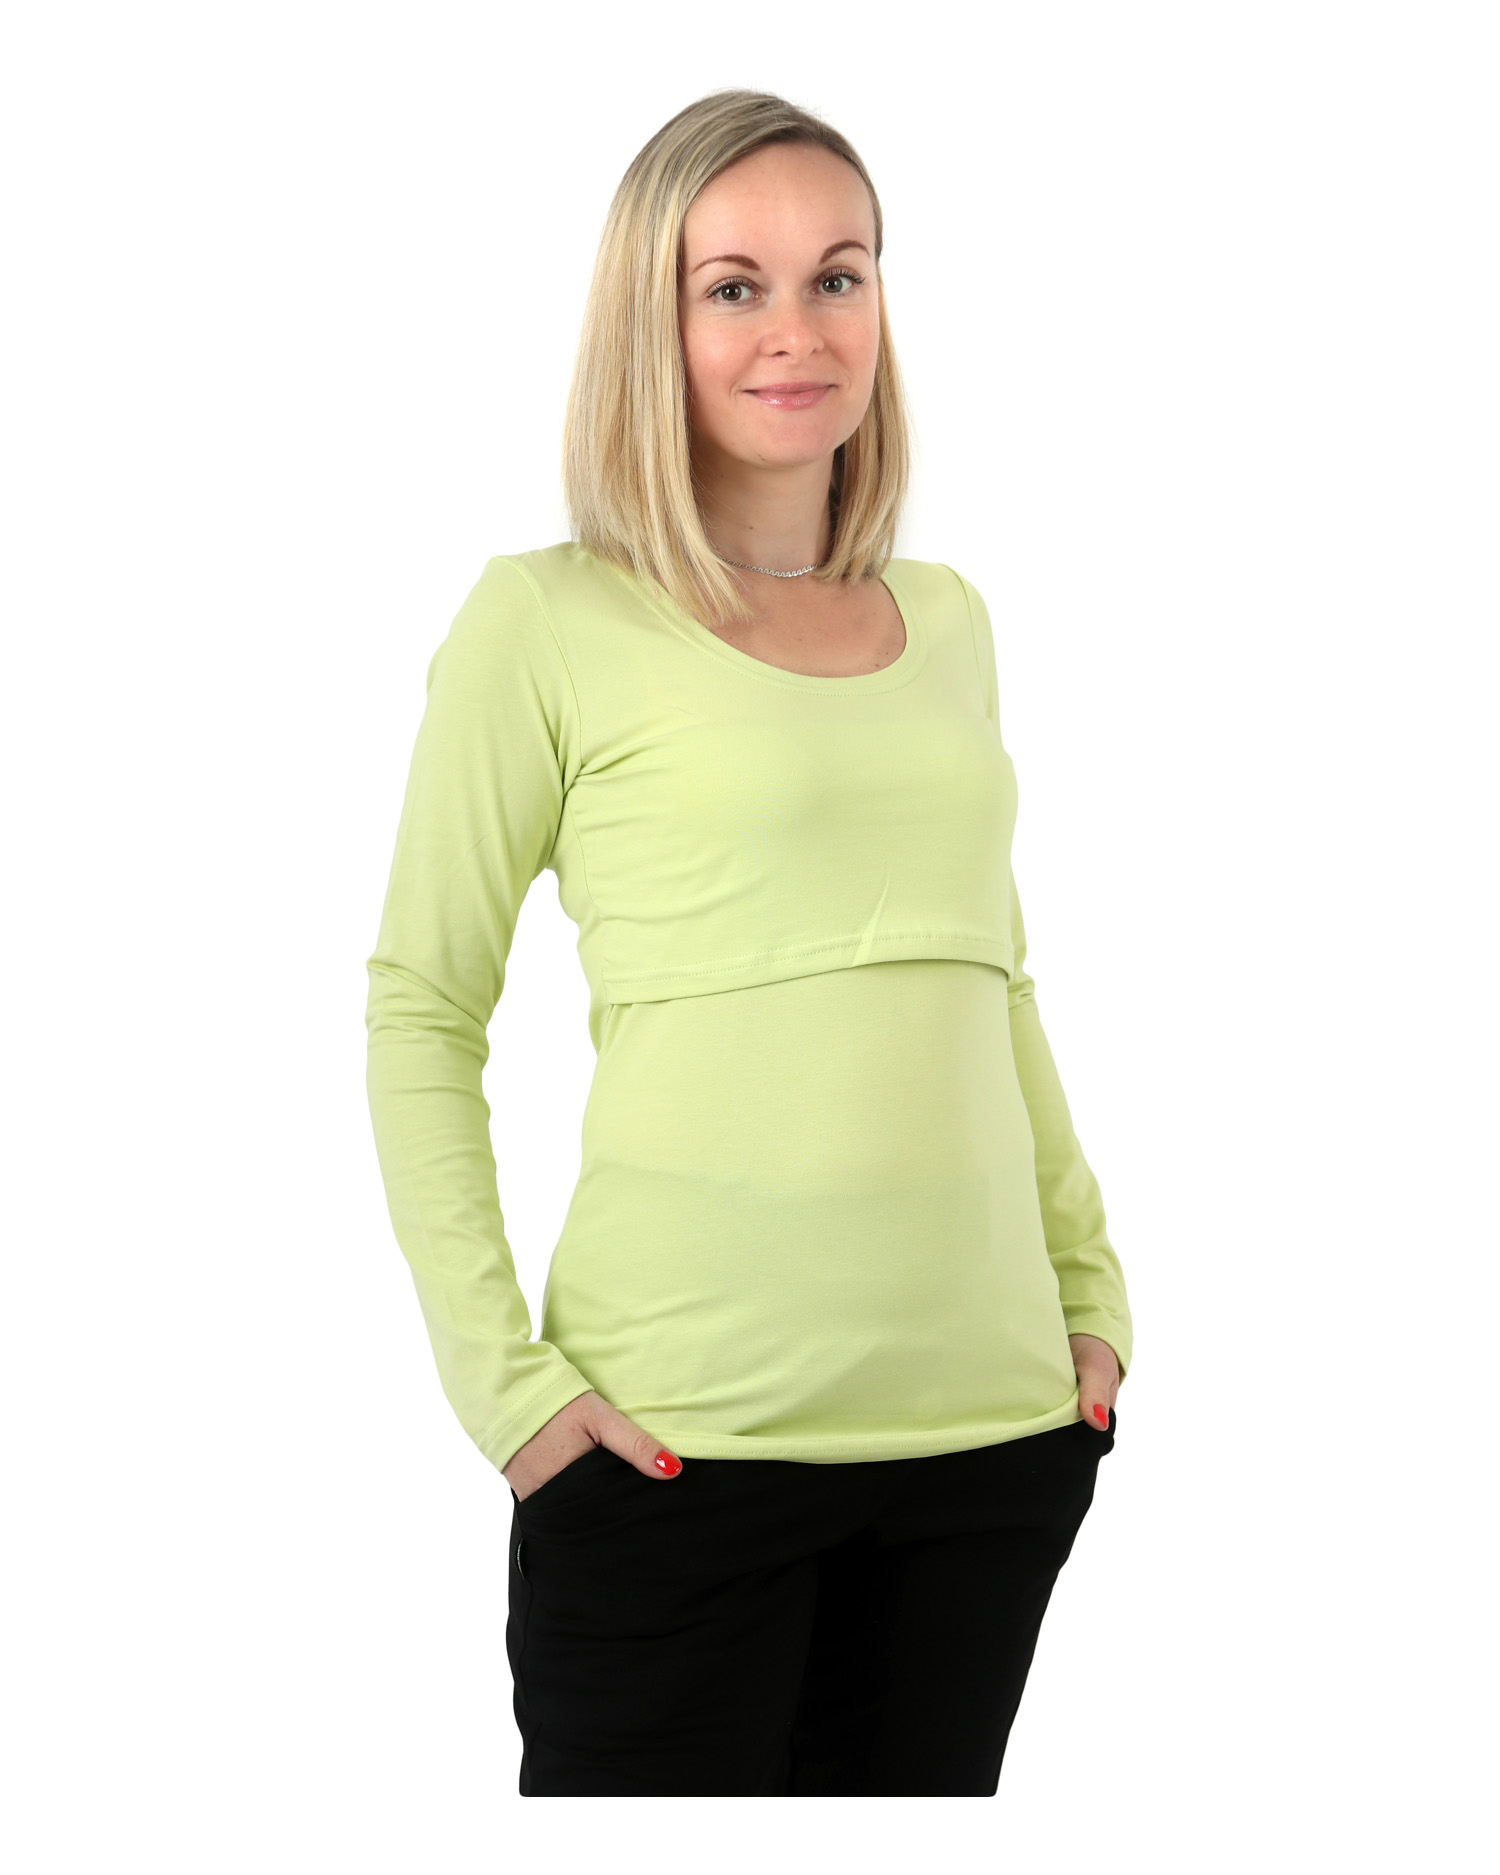 Breast-feeding T-shirt Katerina, long sleeves, LIGHT GREEN